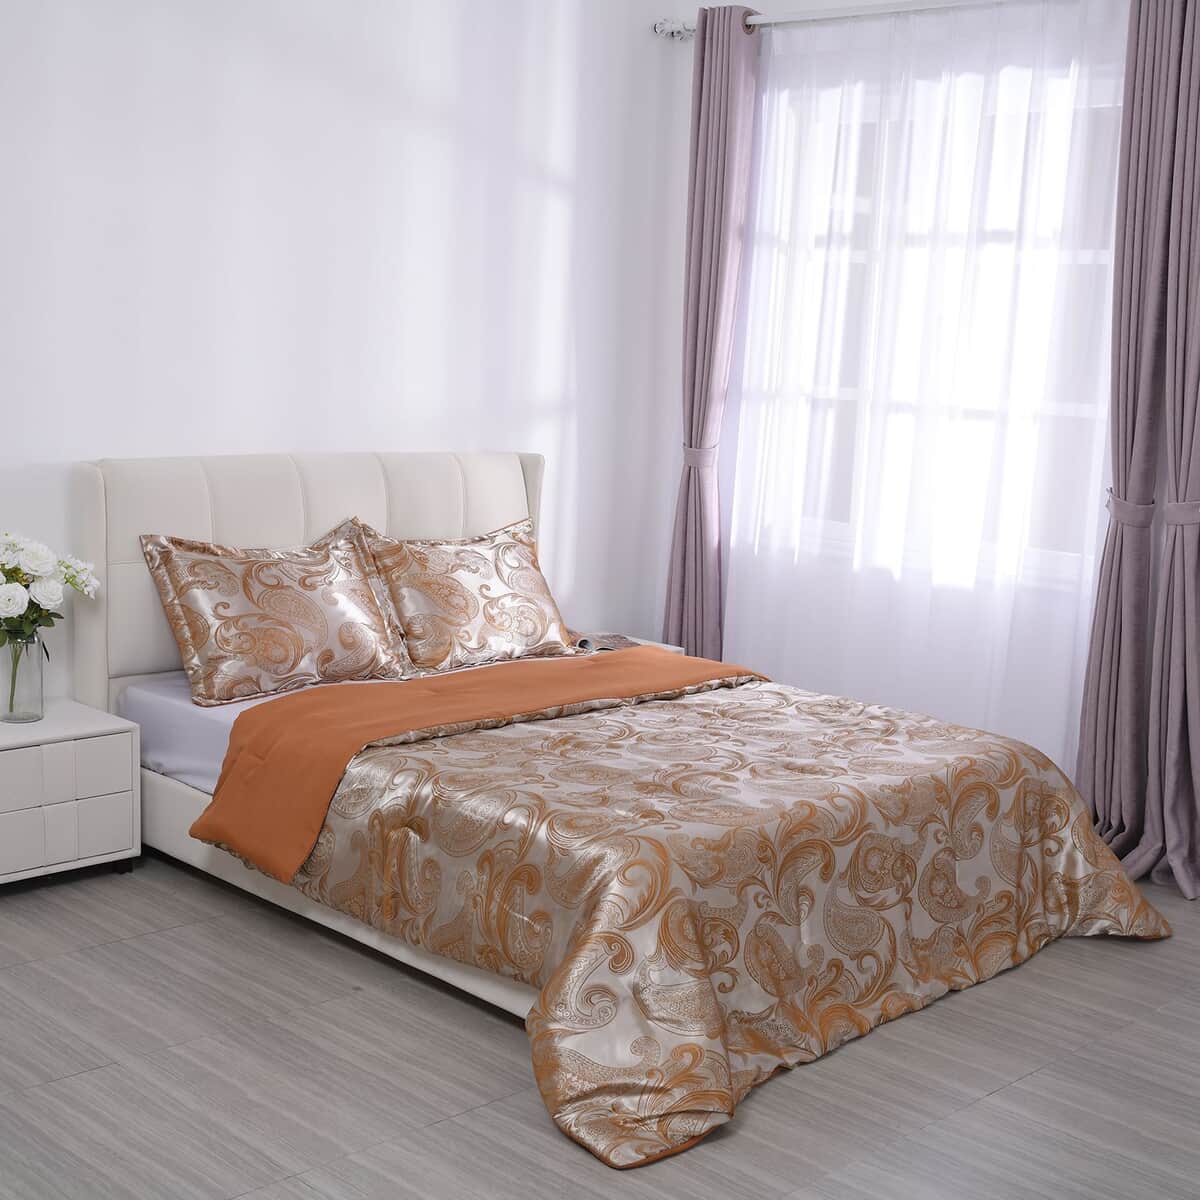 Homesmart Golden Satin Jacquard Floral Pattern Comforter Set - 1 Comforter and 2 Pillowcases (Queen Size) image number 0